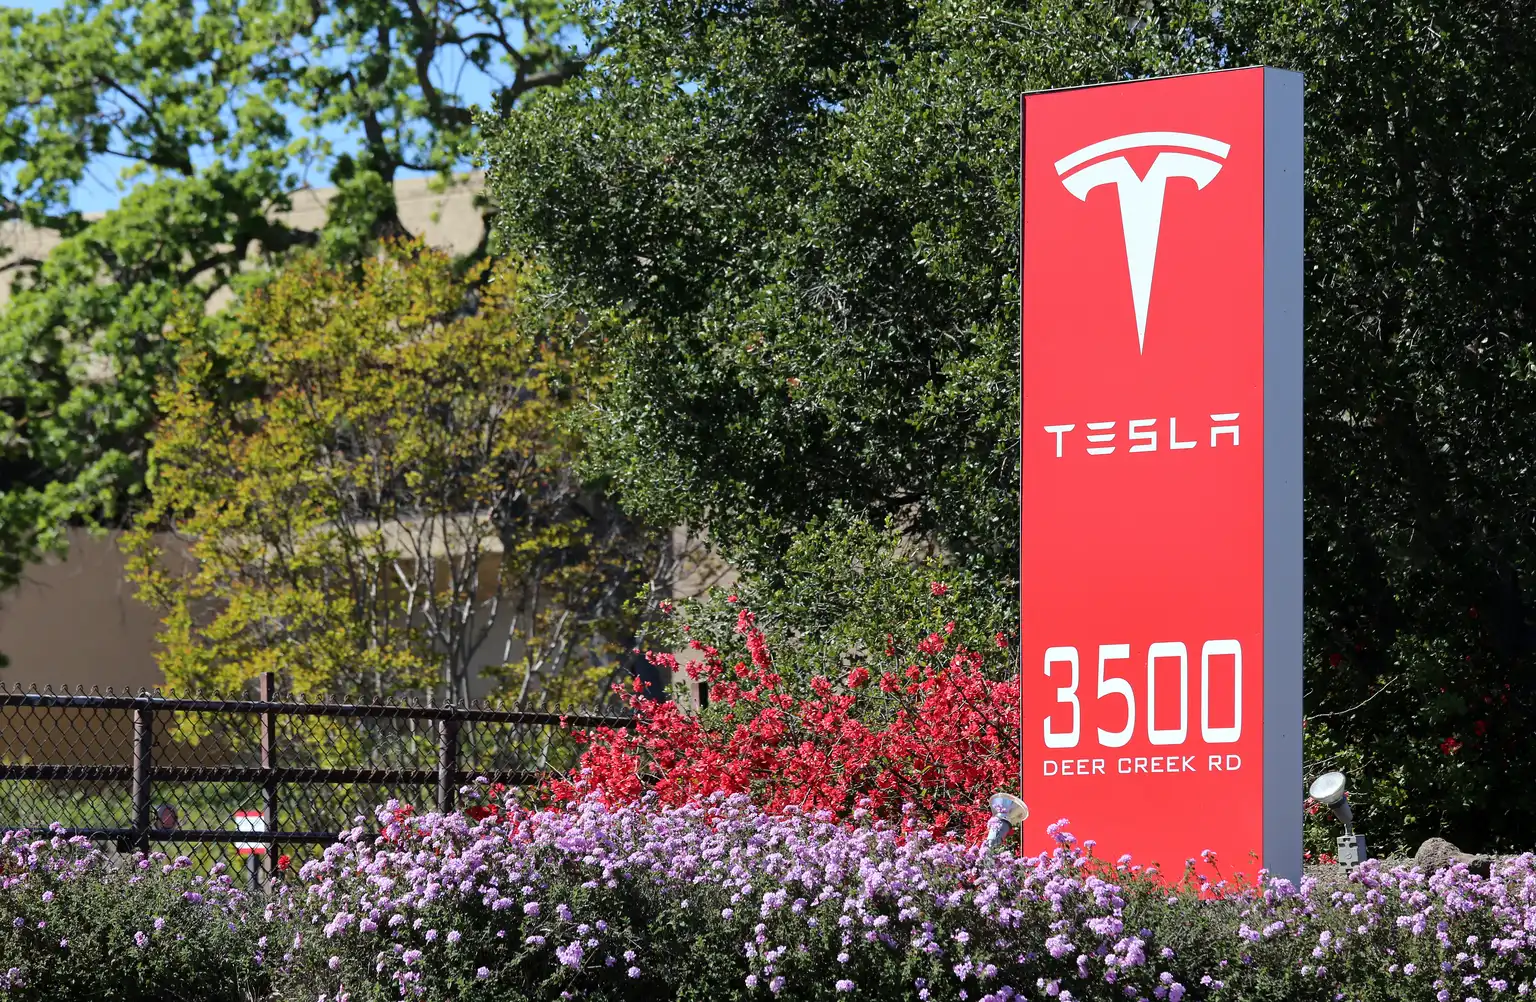 Tesla Q1: Model 2 Could Be Their Model T - Seeking Alpha